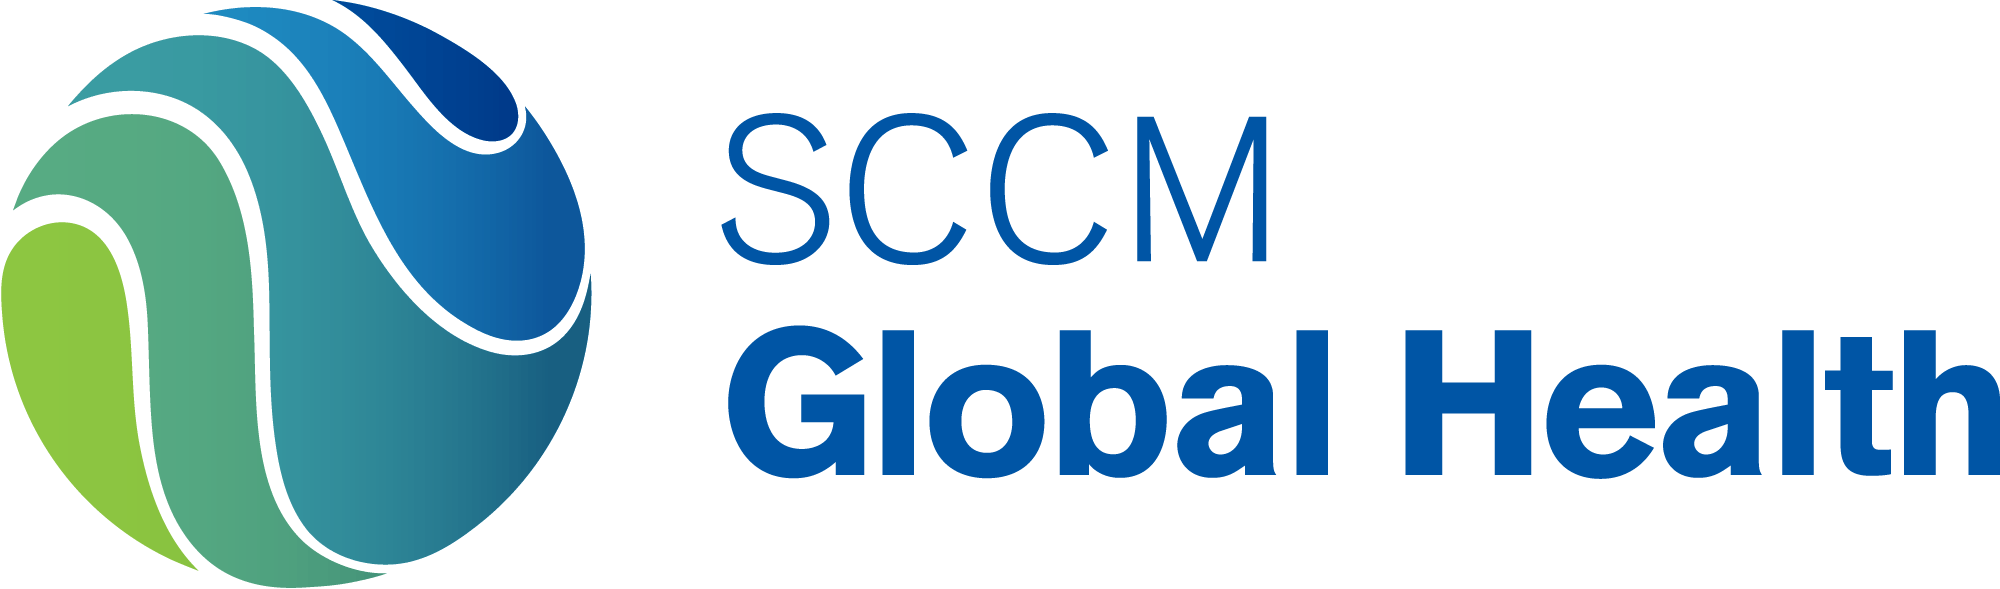 SCCM Global Health